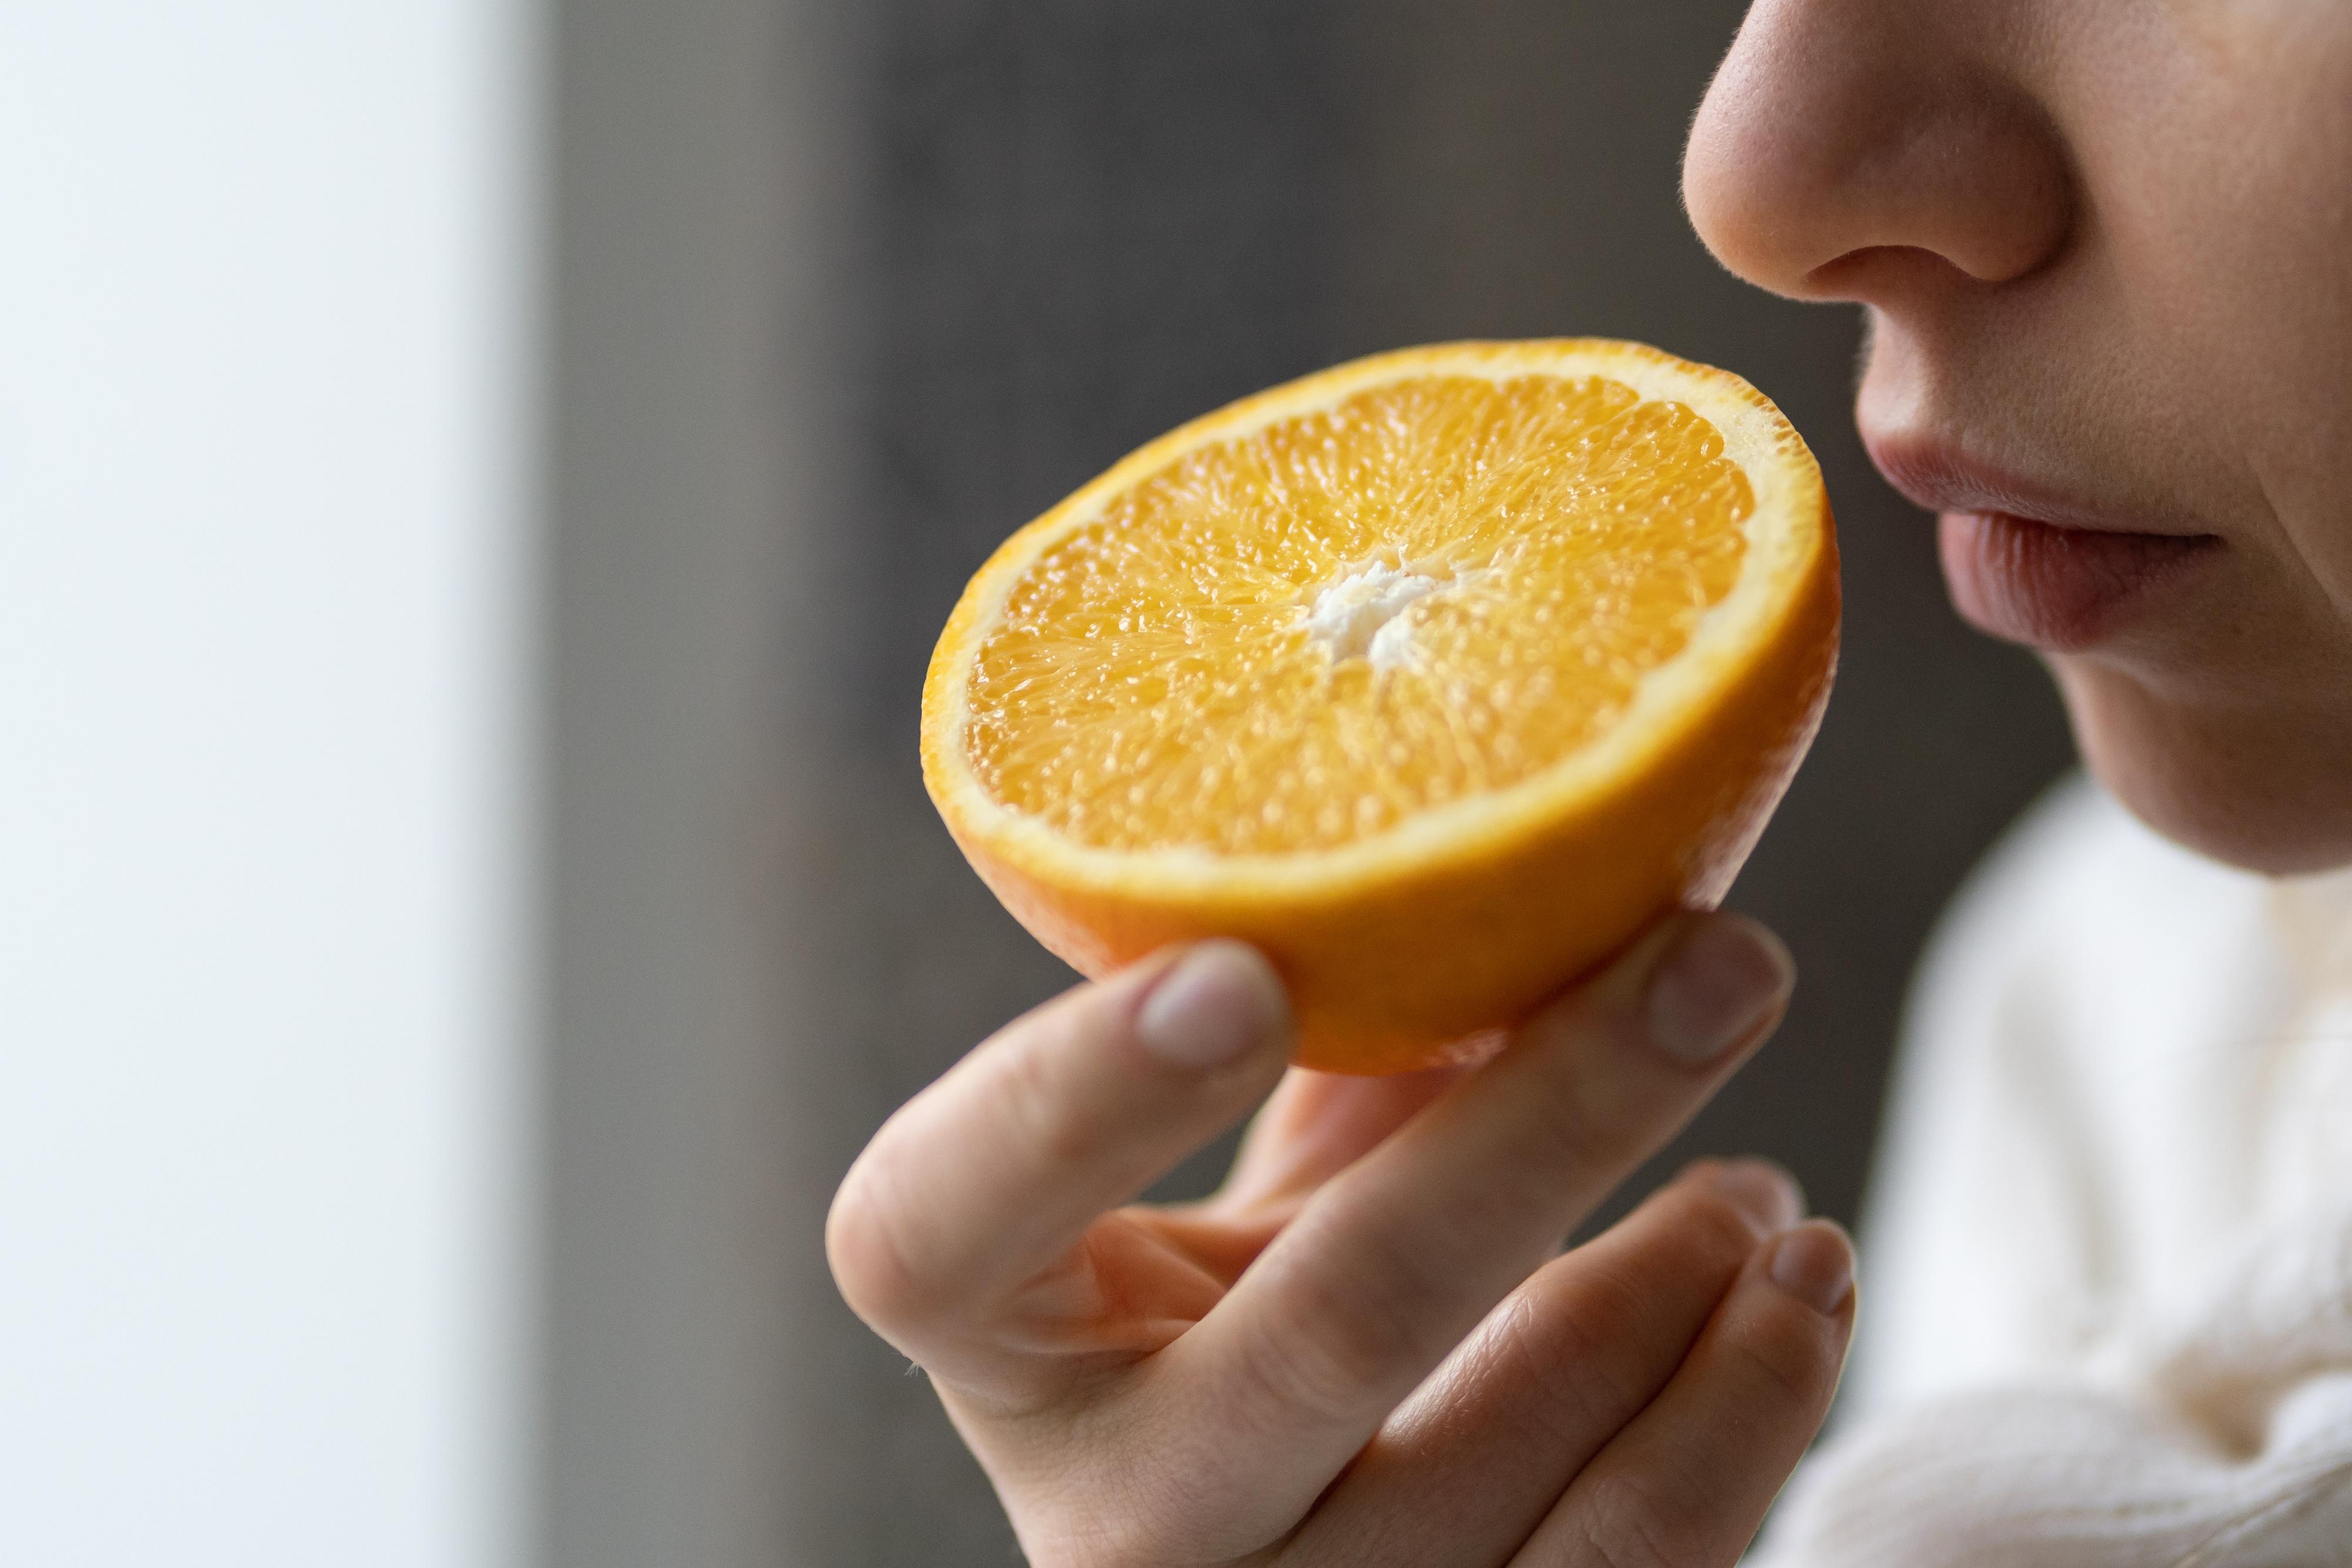 JULESTEMNING: Mange forbinder nok duften av appelsiner med påske og jul.